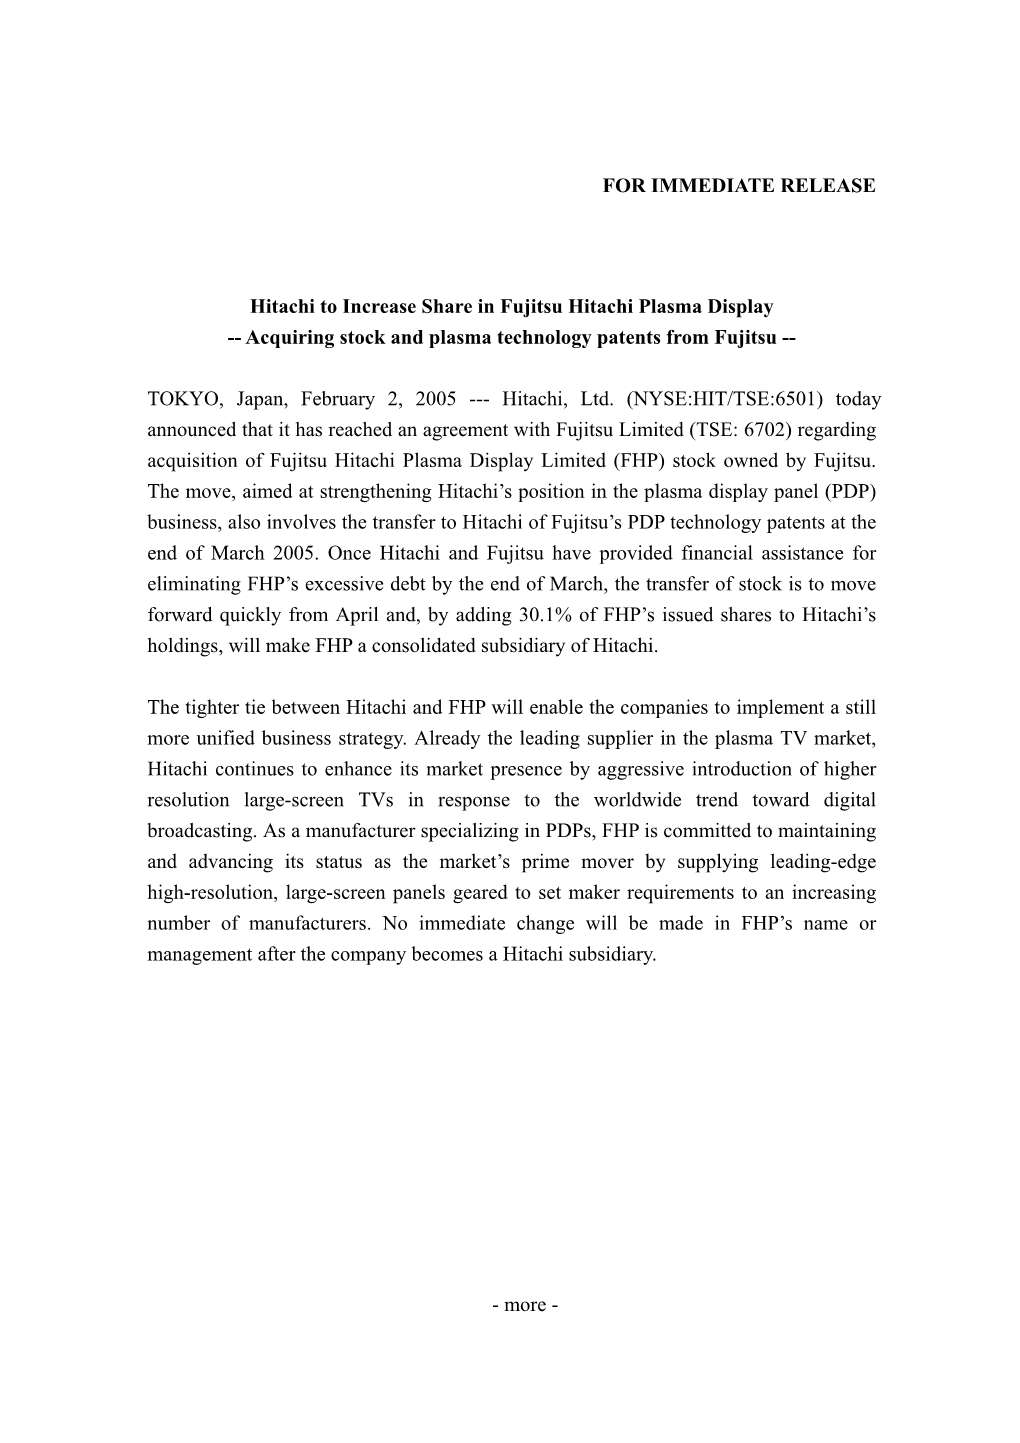 Hitachi to Increase Share in Fujitsu Hitachi Plasma Display -- Acquiring Stock and Plasma Technology Patents from Fujitsu